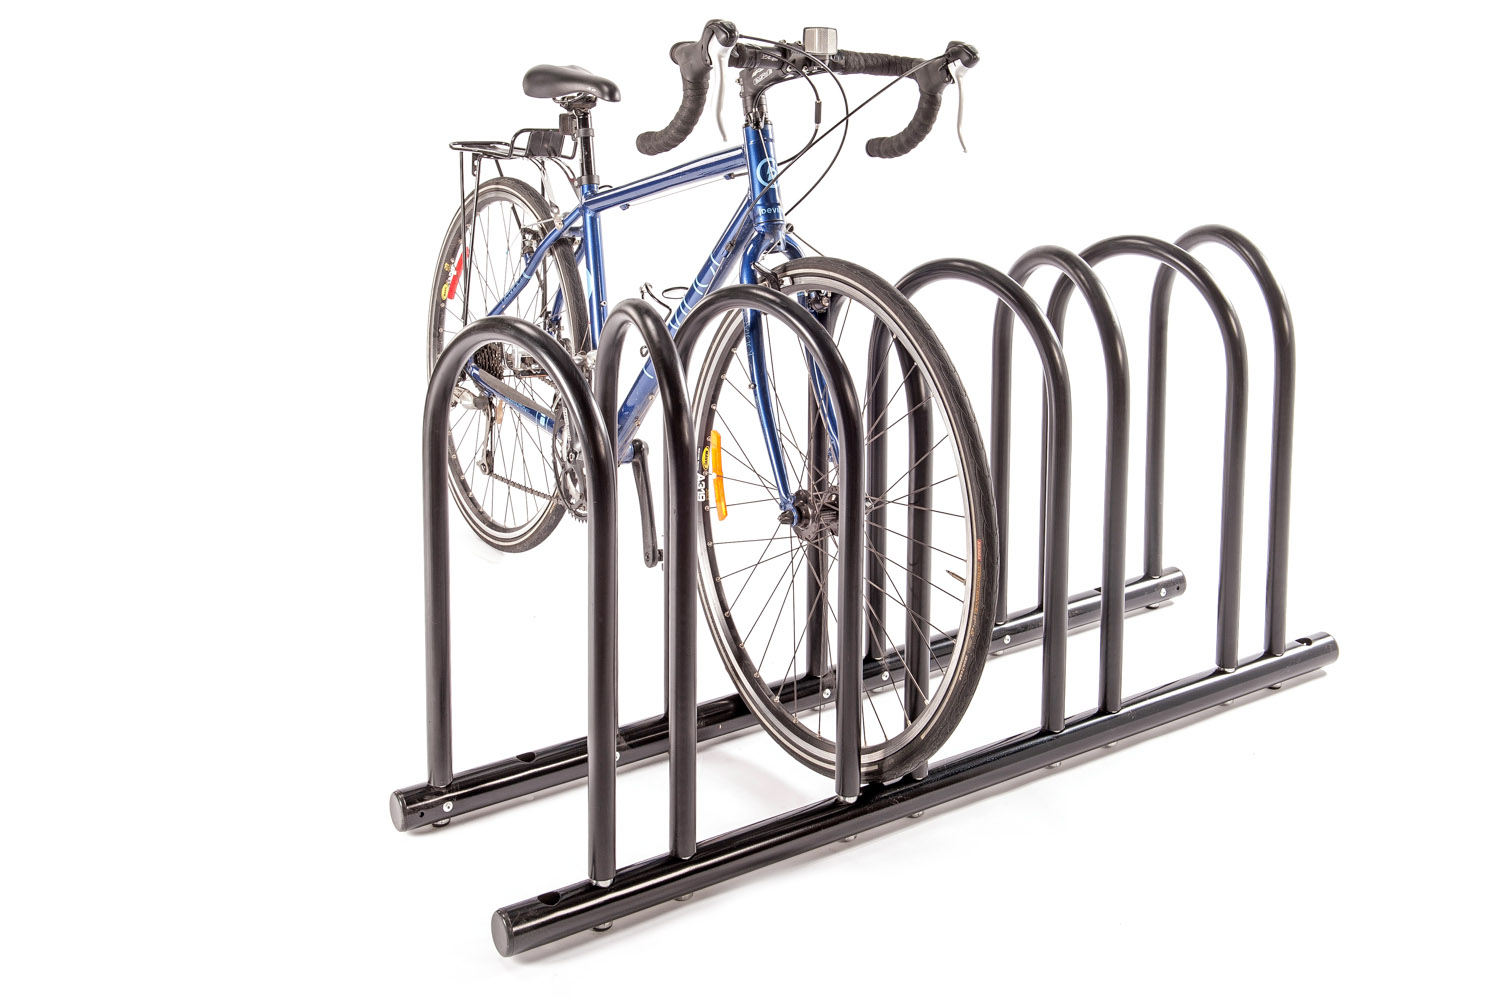 CP High-Density bike rack – Velo Rack